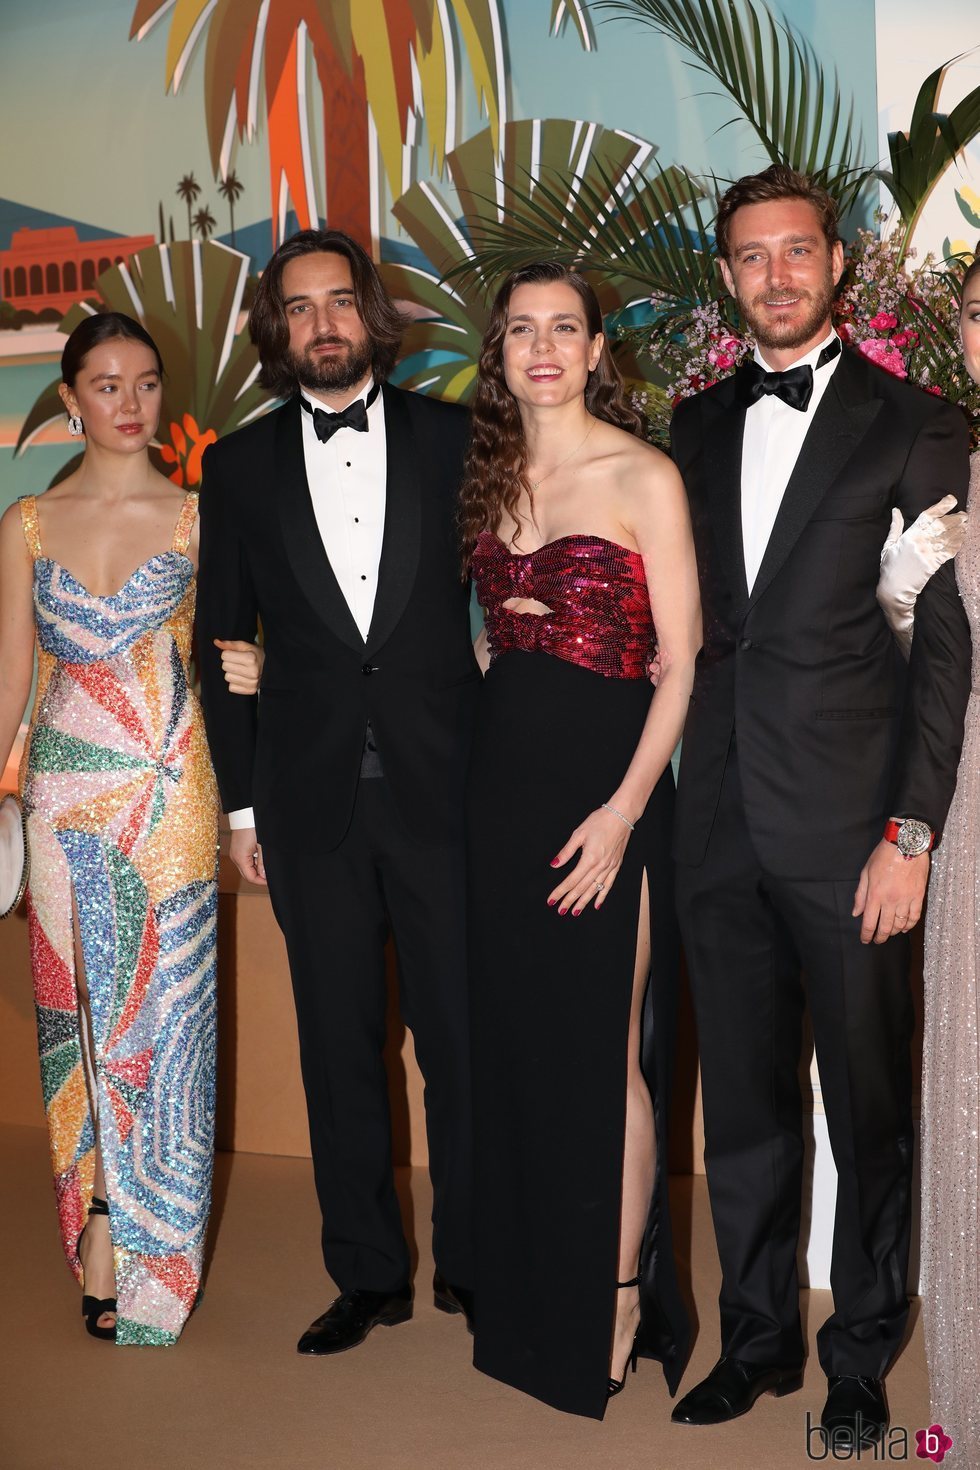 Alexandra de Hannover, Dimitri Rassam, Carlota Casiraghi y Pierre Casiraghi en el Baile de la Rosa 2019